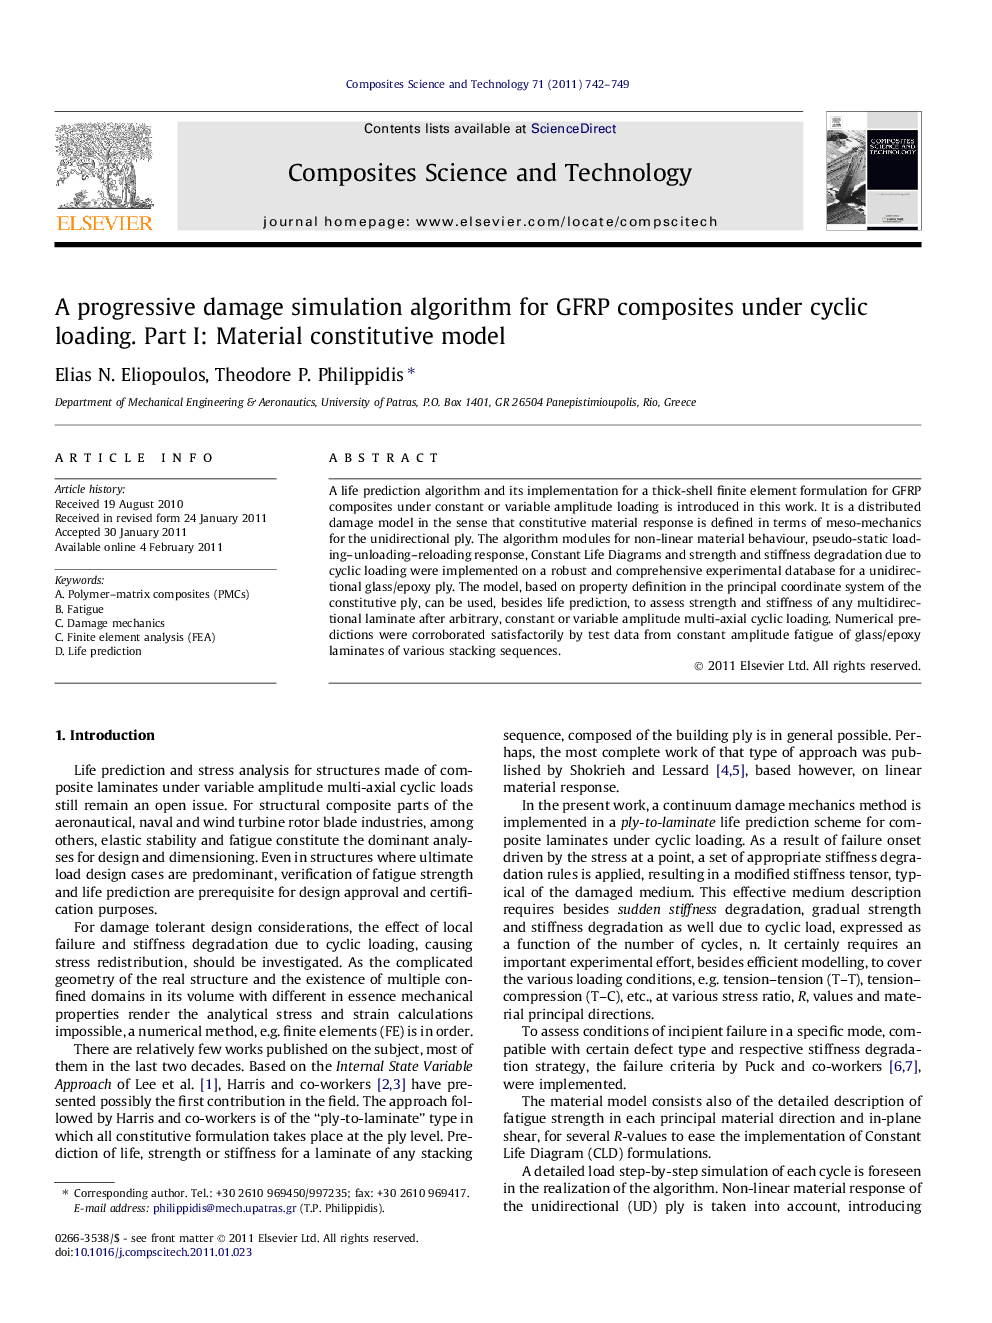 A progressive damage simulation algorithm for GFRP composites under cyclic loading. Part I: Material constitutive model